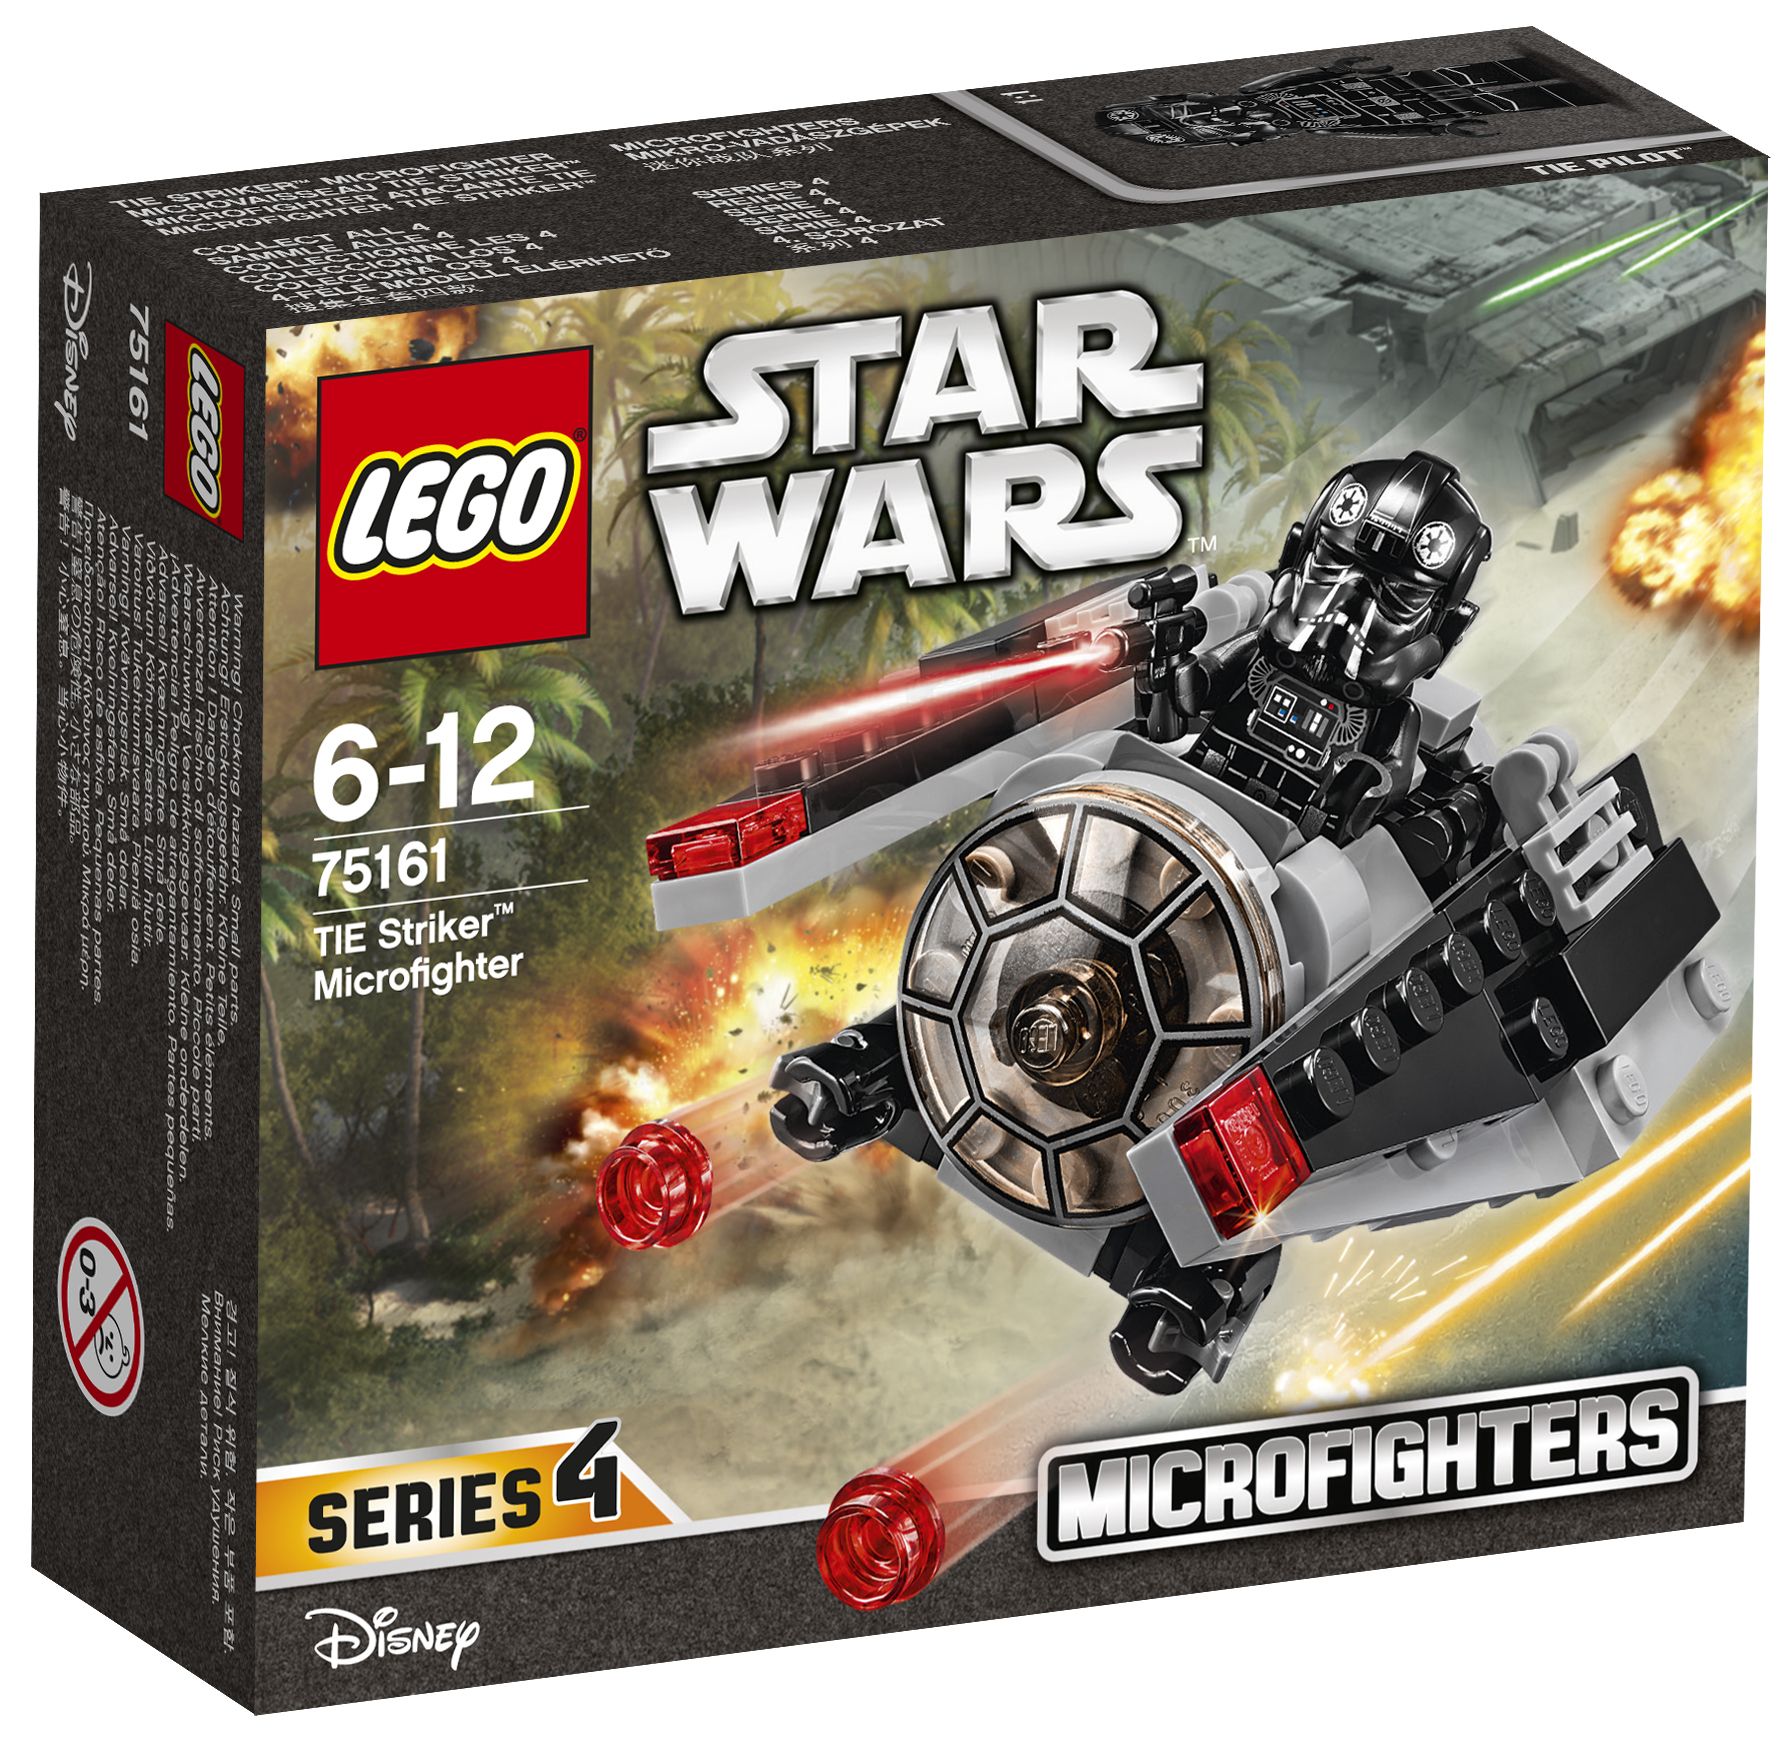 LEGO Stars Wars 75163 Microfighters Krennic Imperial Shuttle